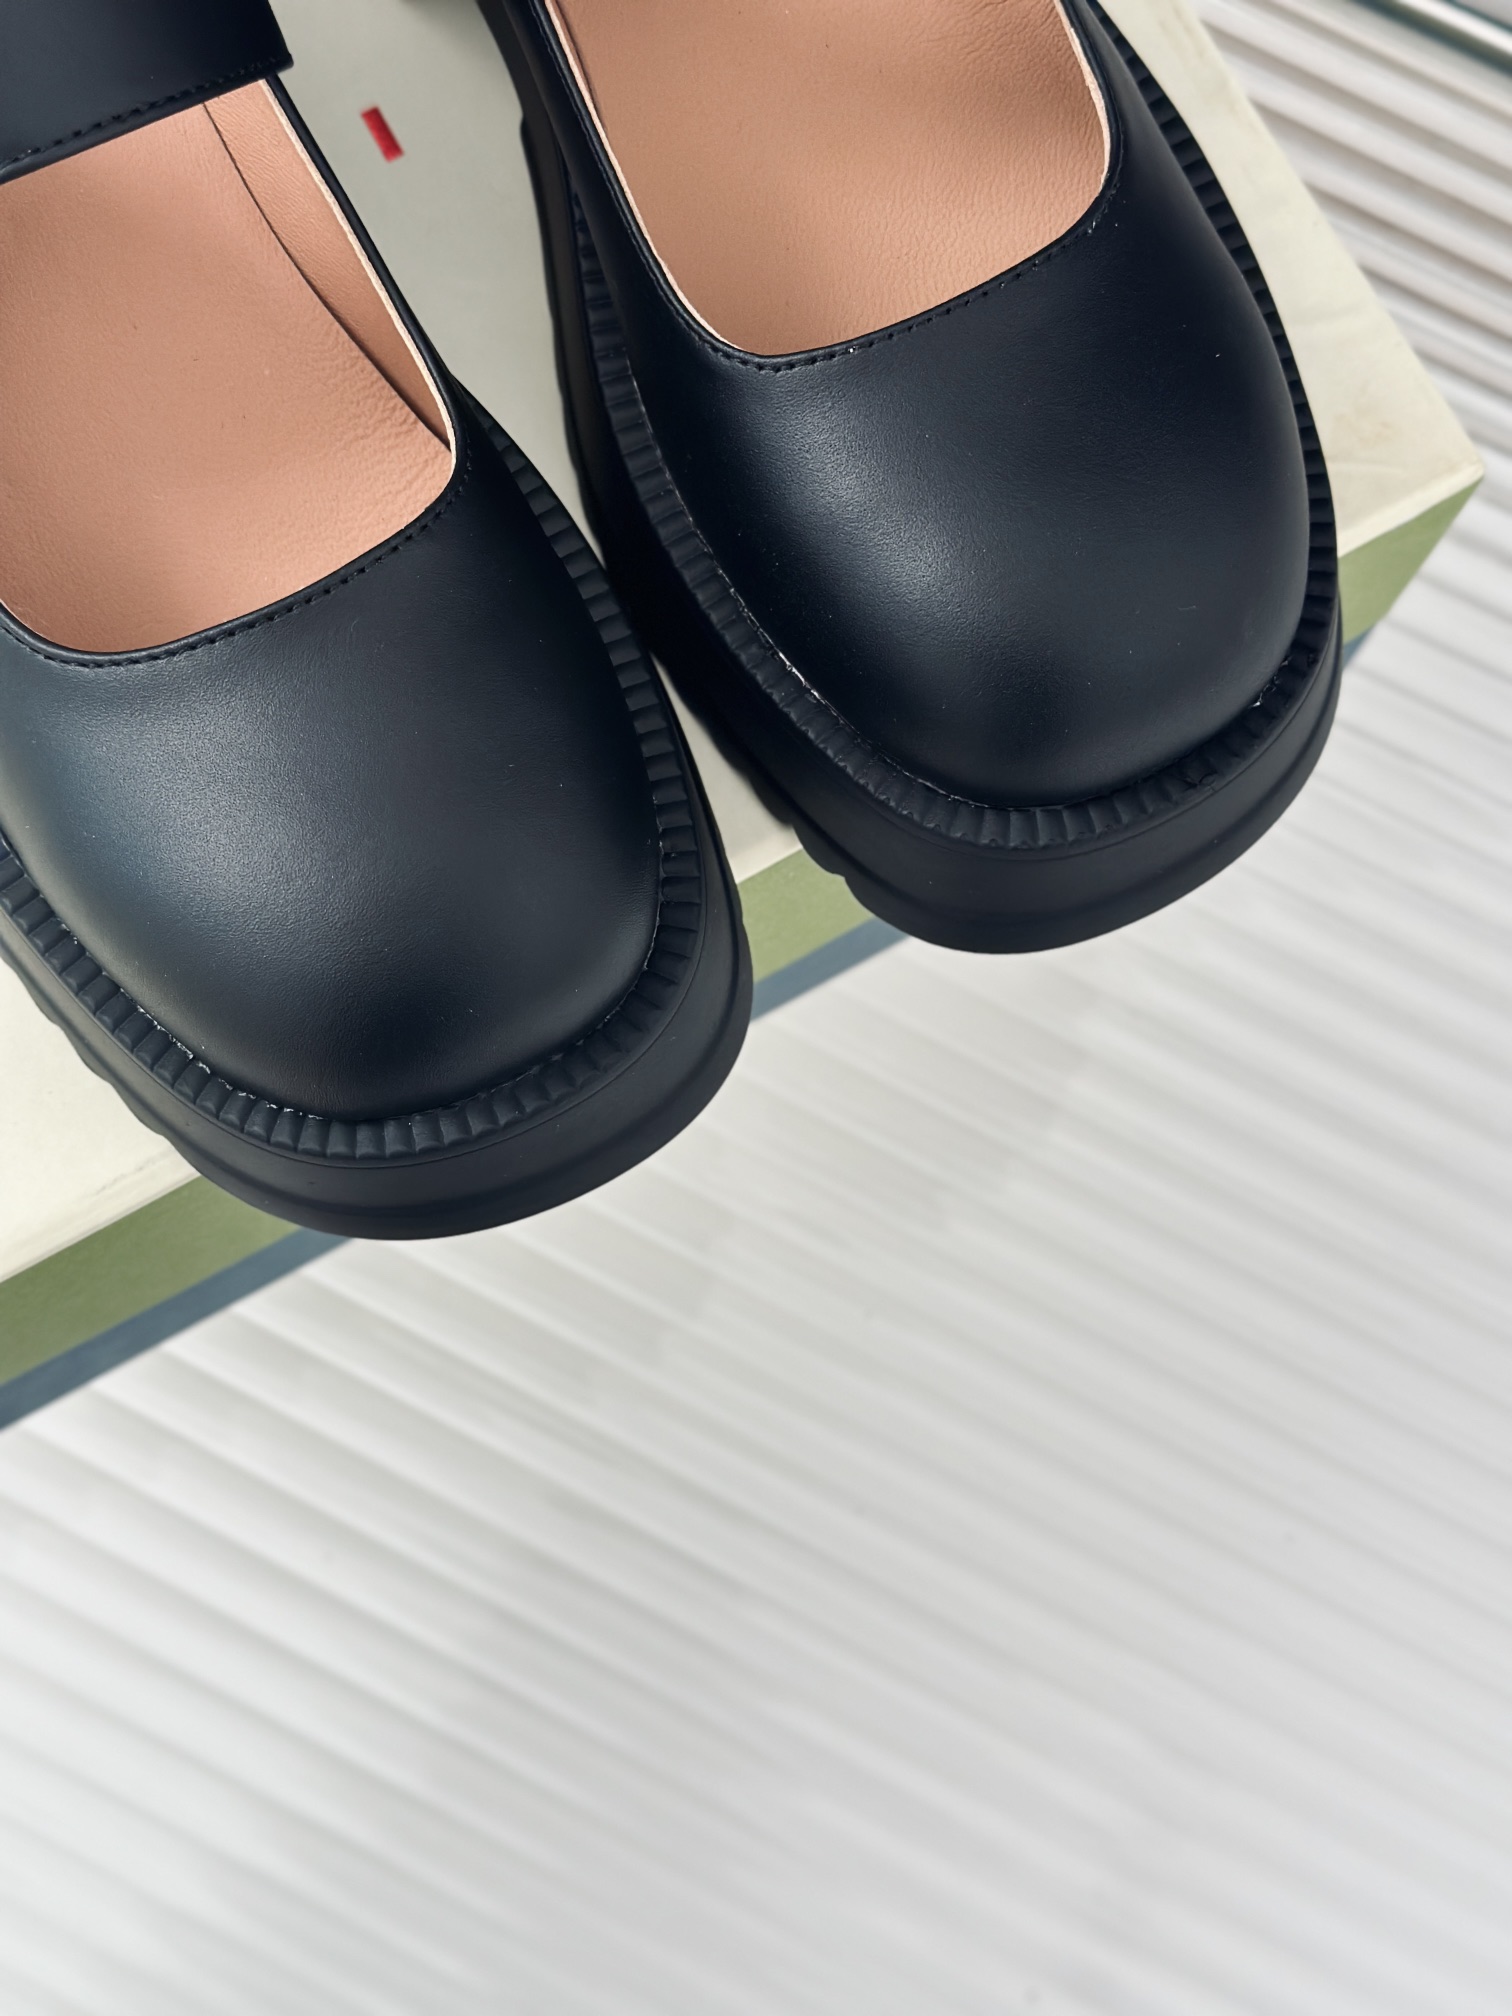 Marni玛尼23S经典四季厚底玛丽珍鞋鞋型整体特别简洁还复古配色干净不过时上脚有多舒服谁穿谁知道超级百